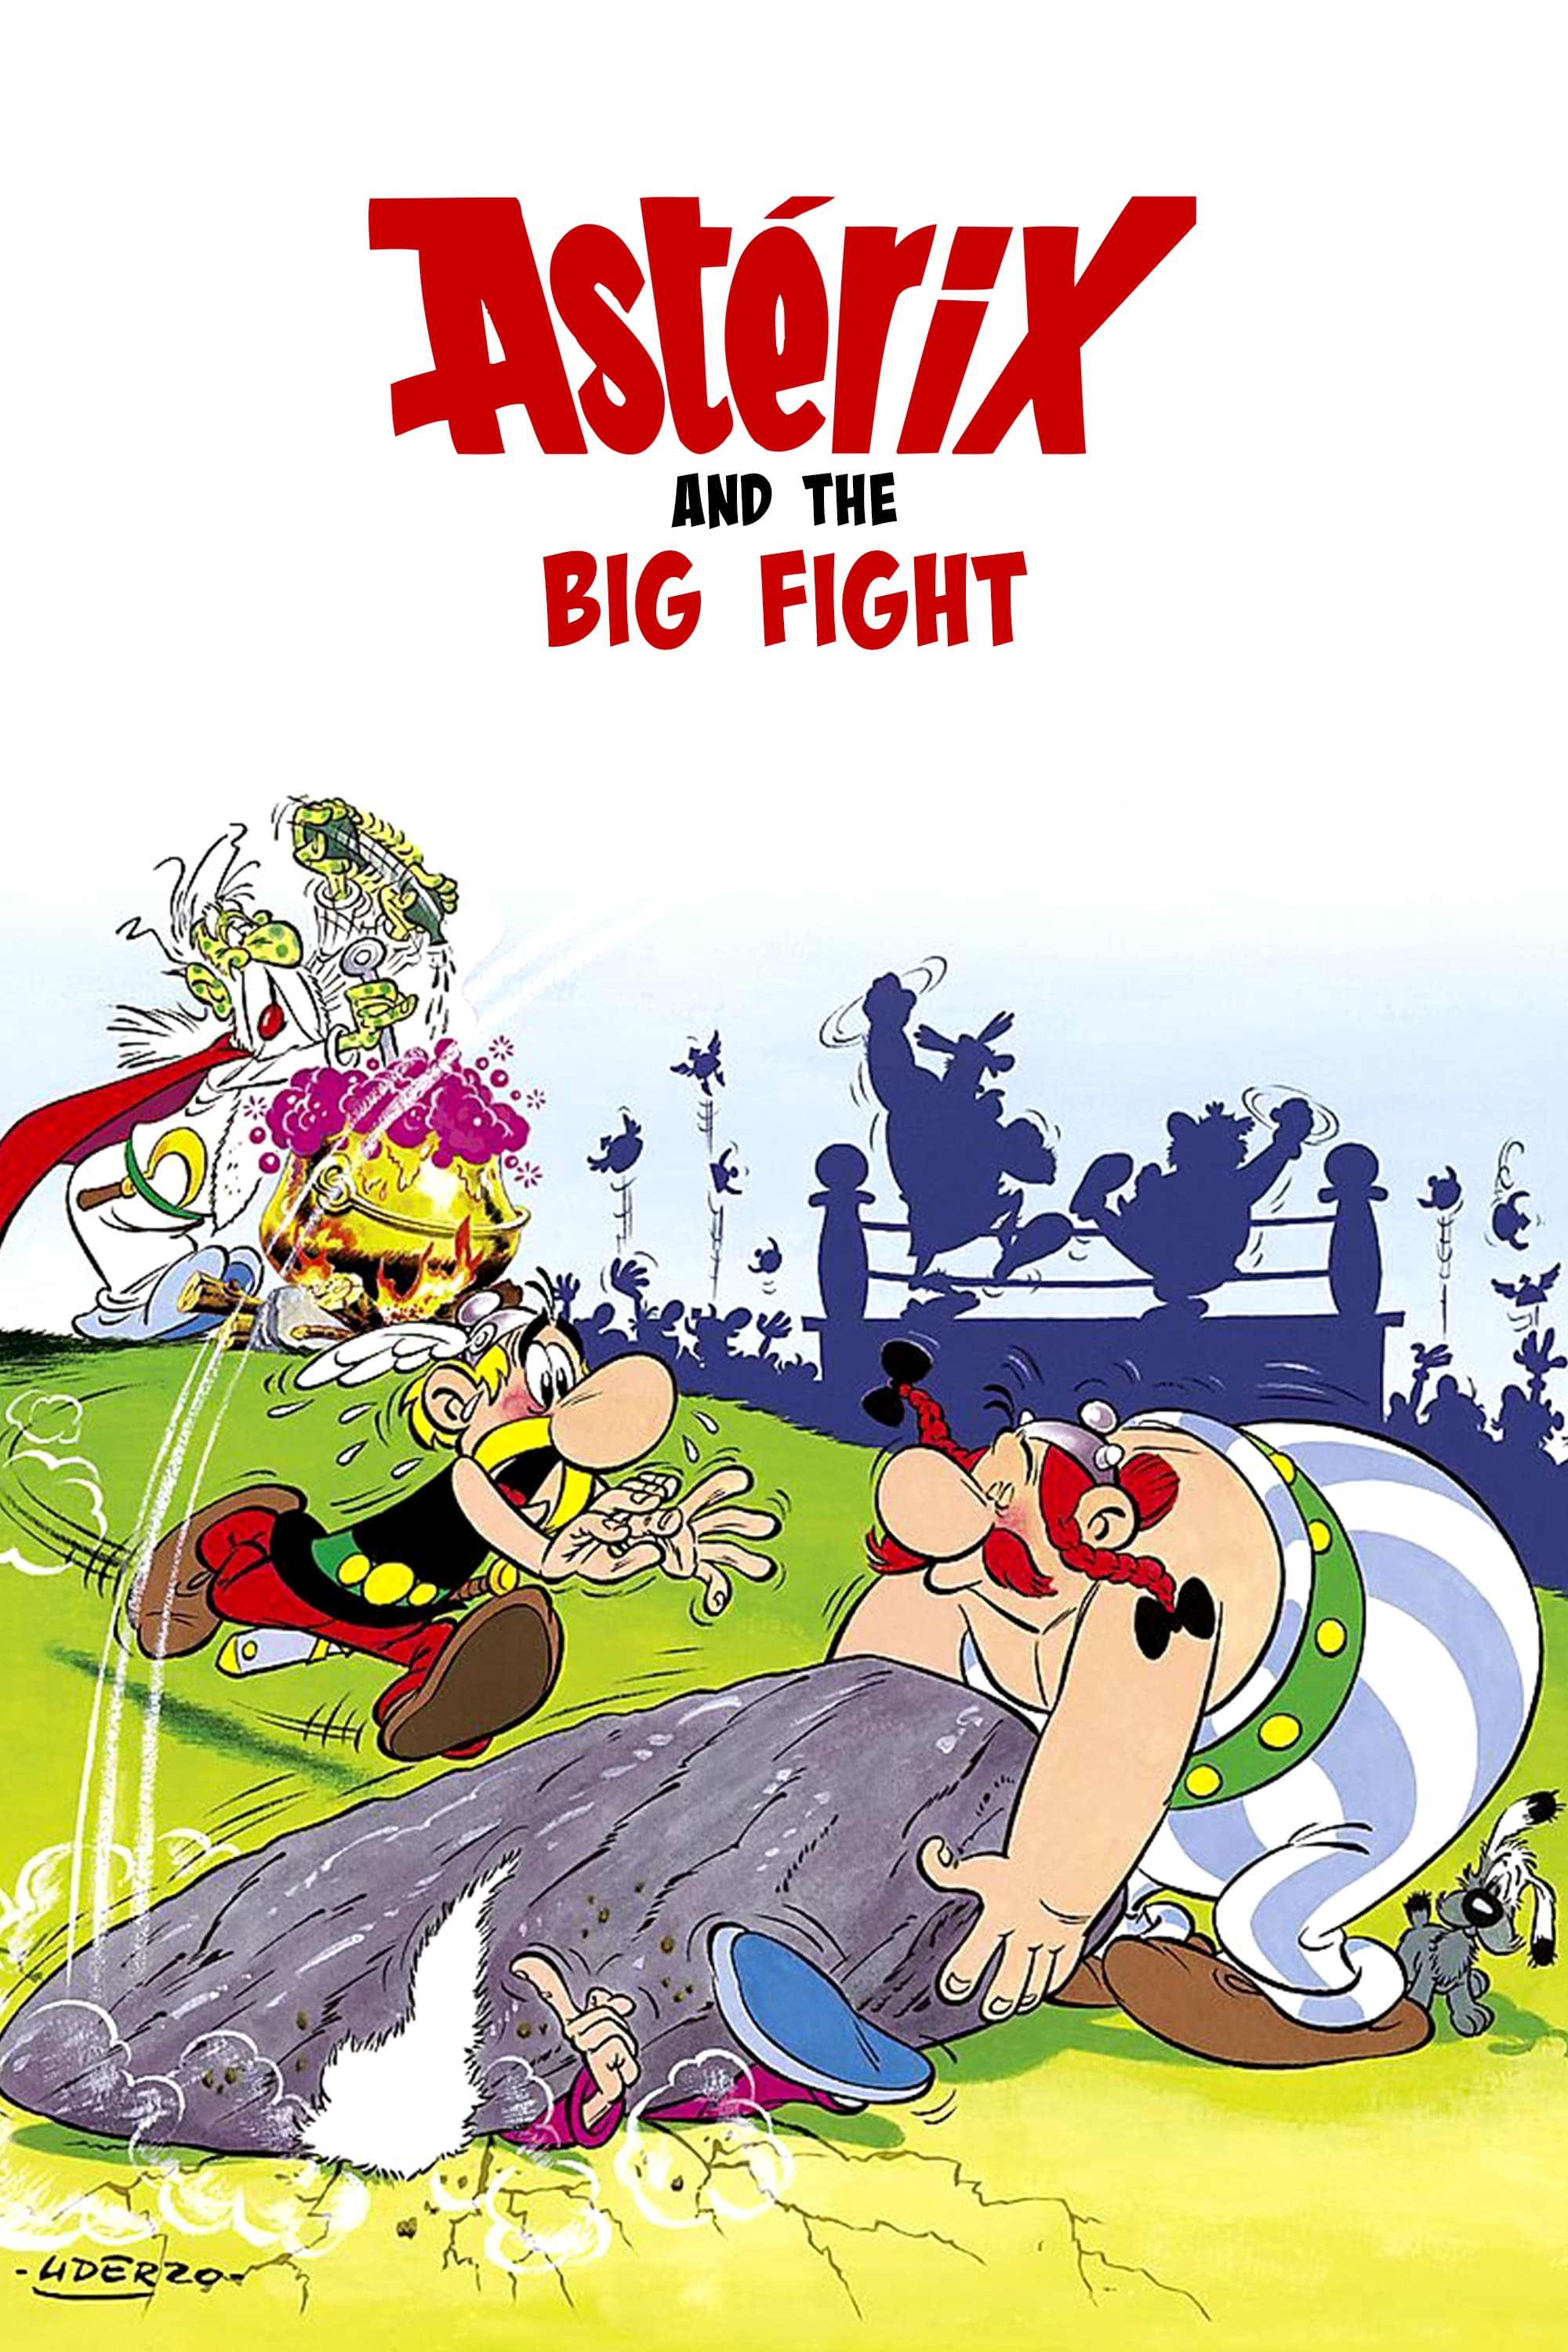 Asterix - Operation Hinkelstein (1989)